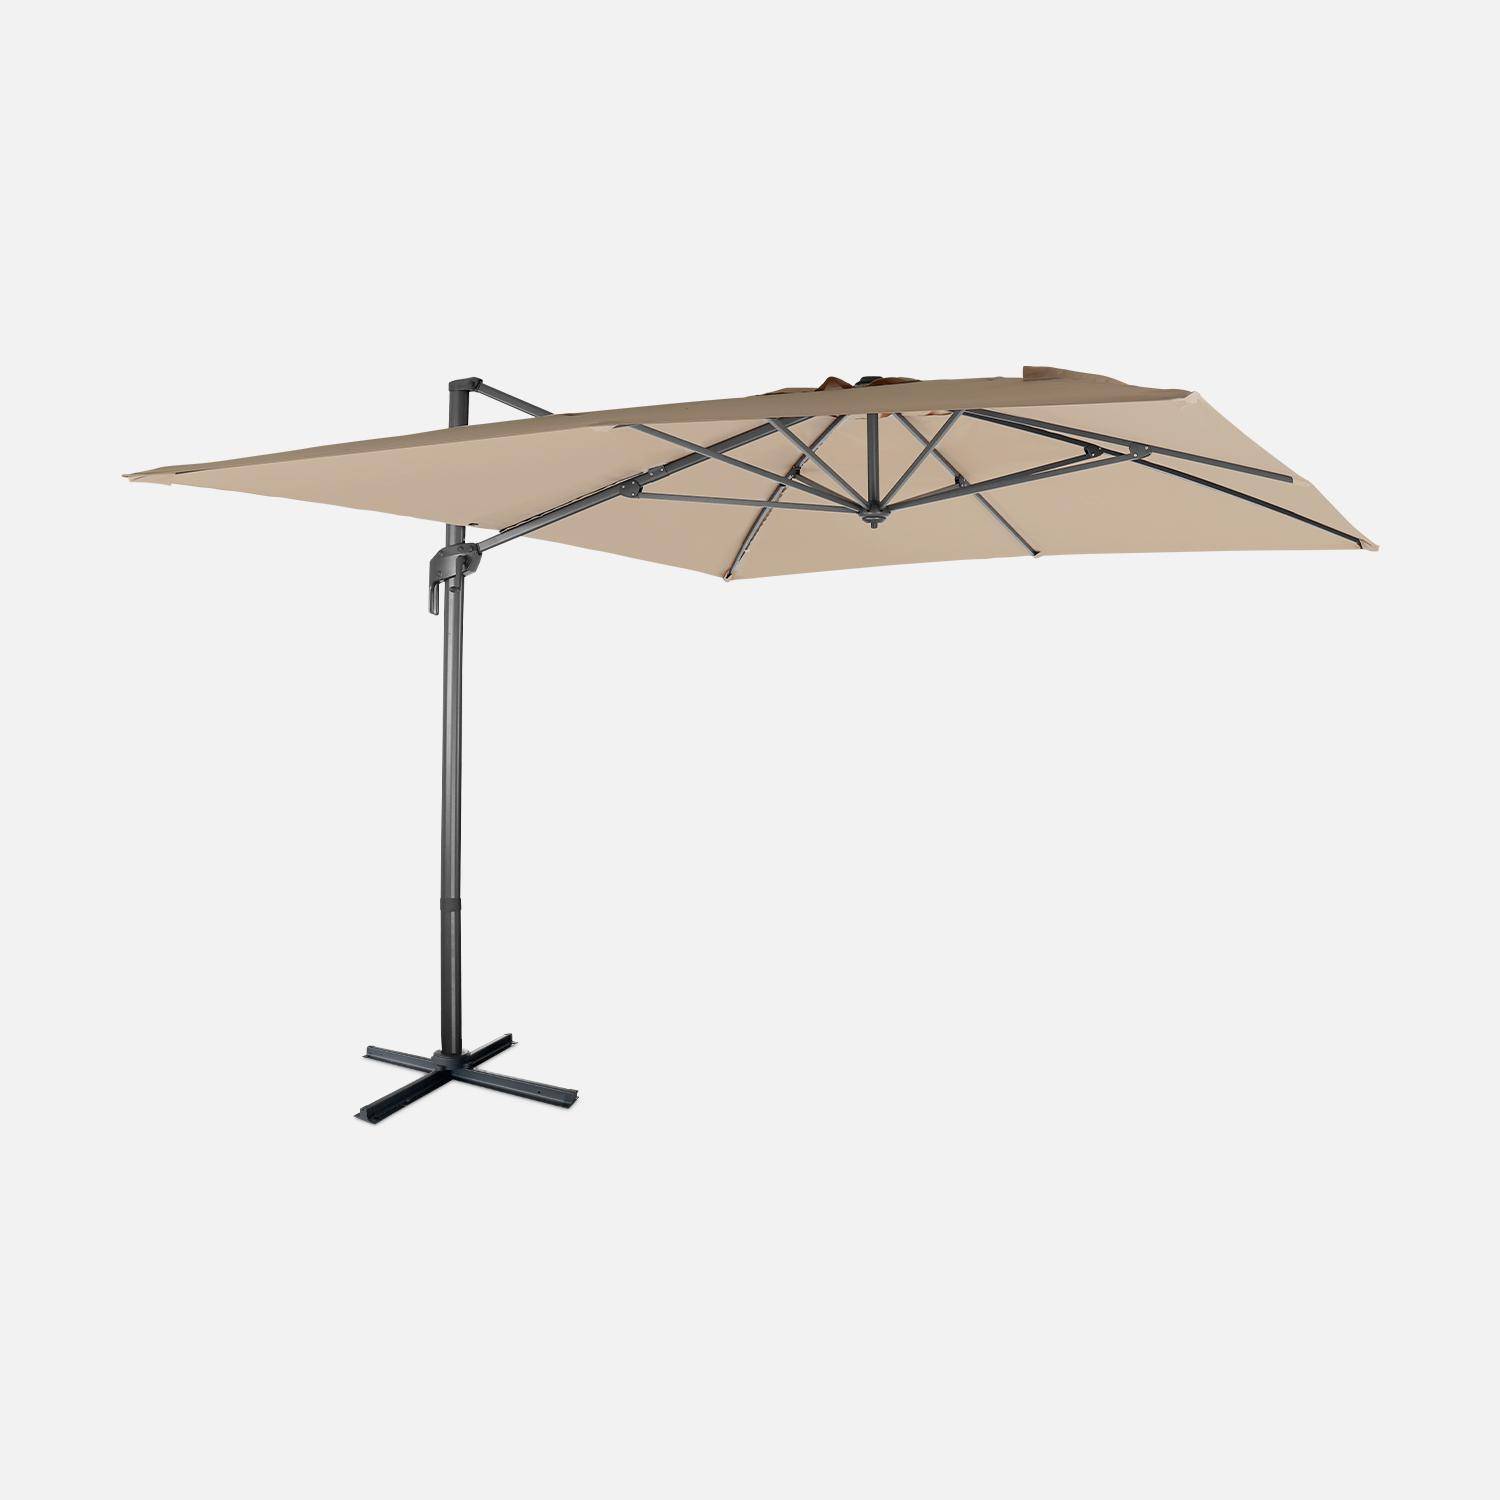 Parasol rectangular deportado 3 x 4 m - Antibes - beige - parasol deportado, basculante, plegable y giratorio a 360,sweeek,Photo3